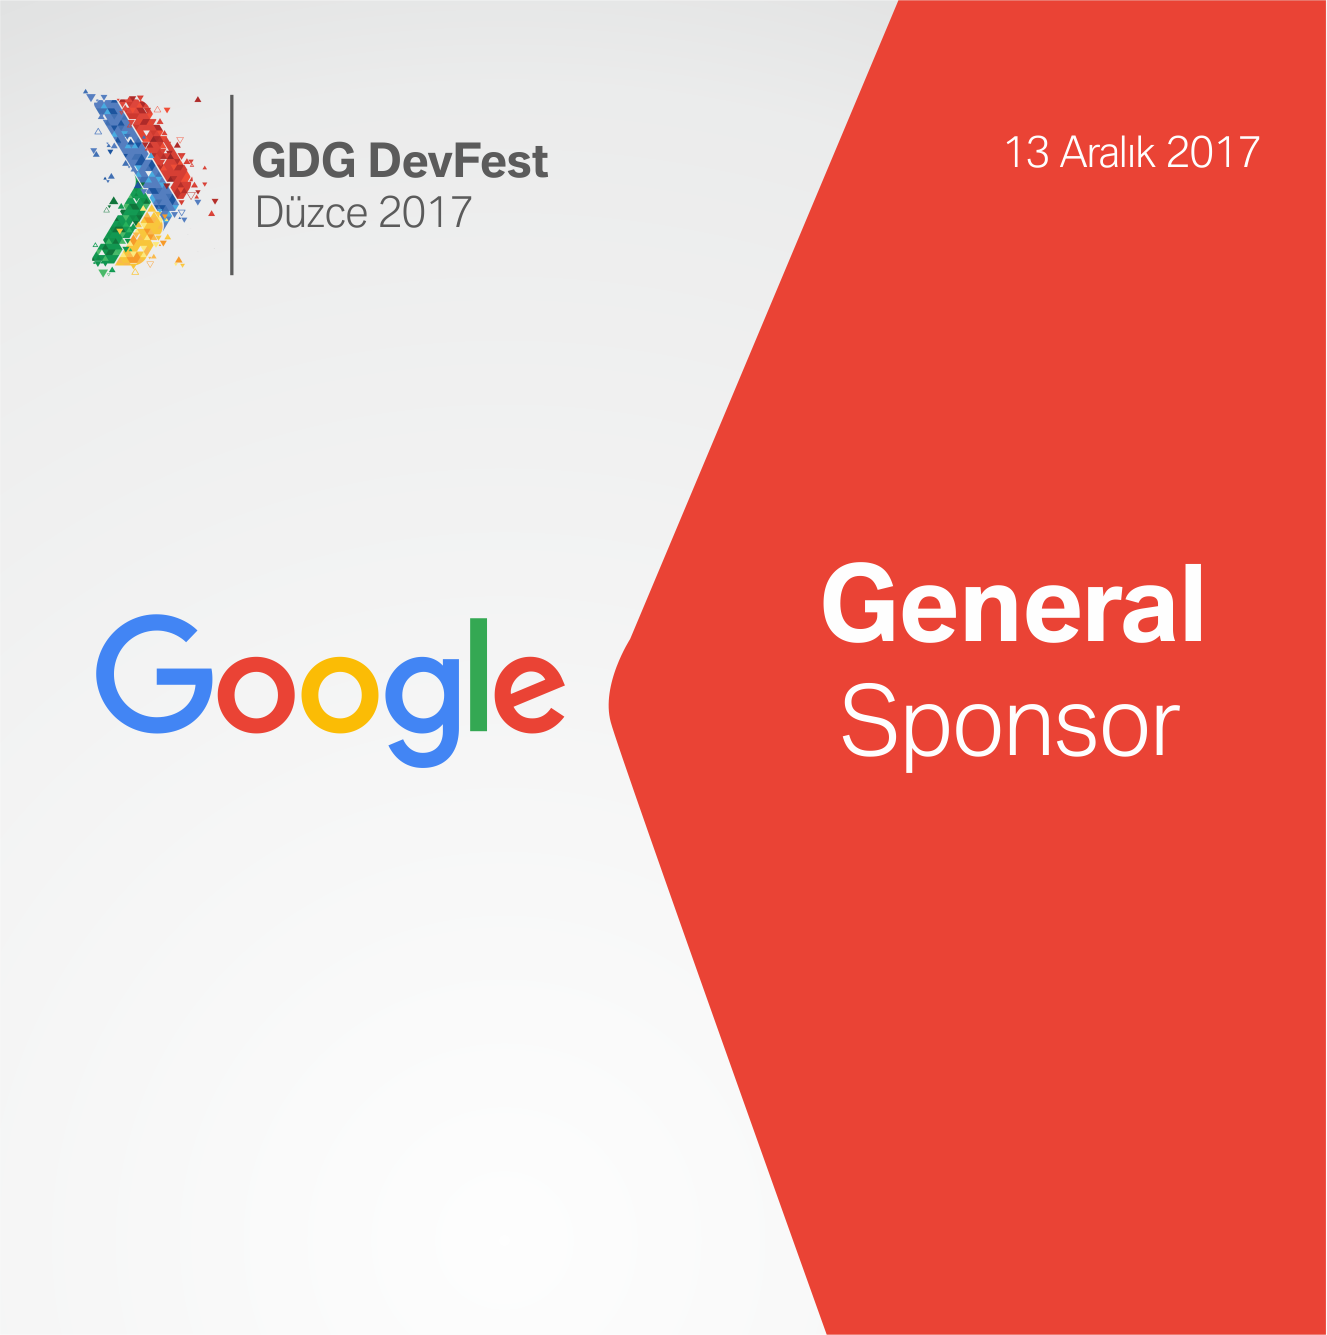 GDG DevFest Düzce 2017 General Sponsor: Google